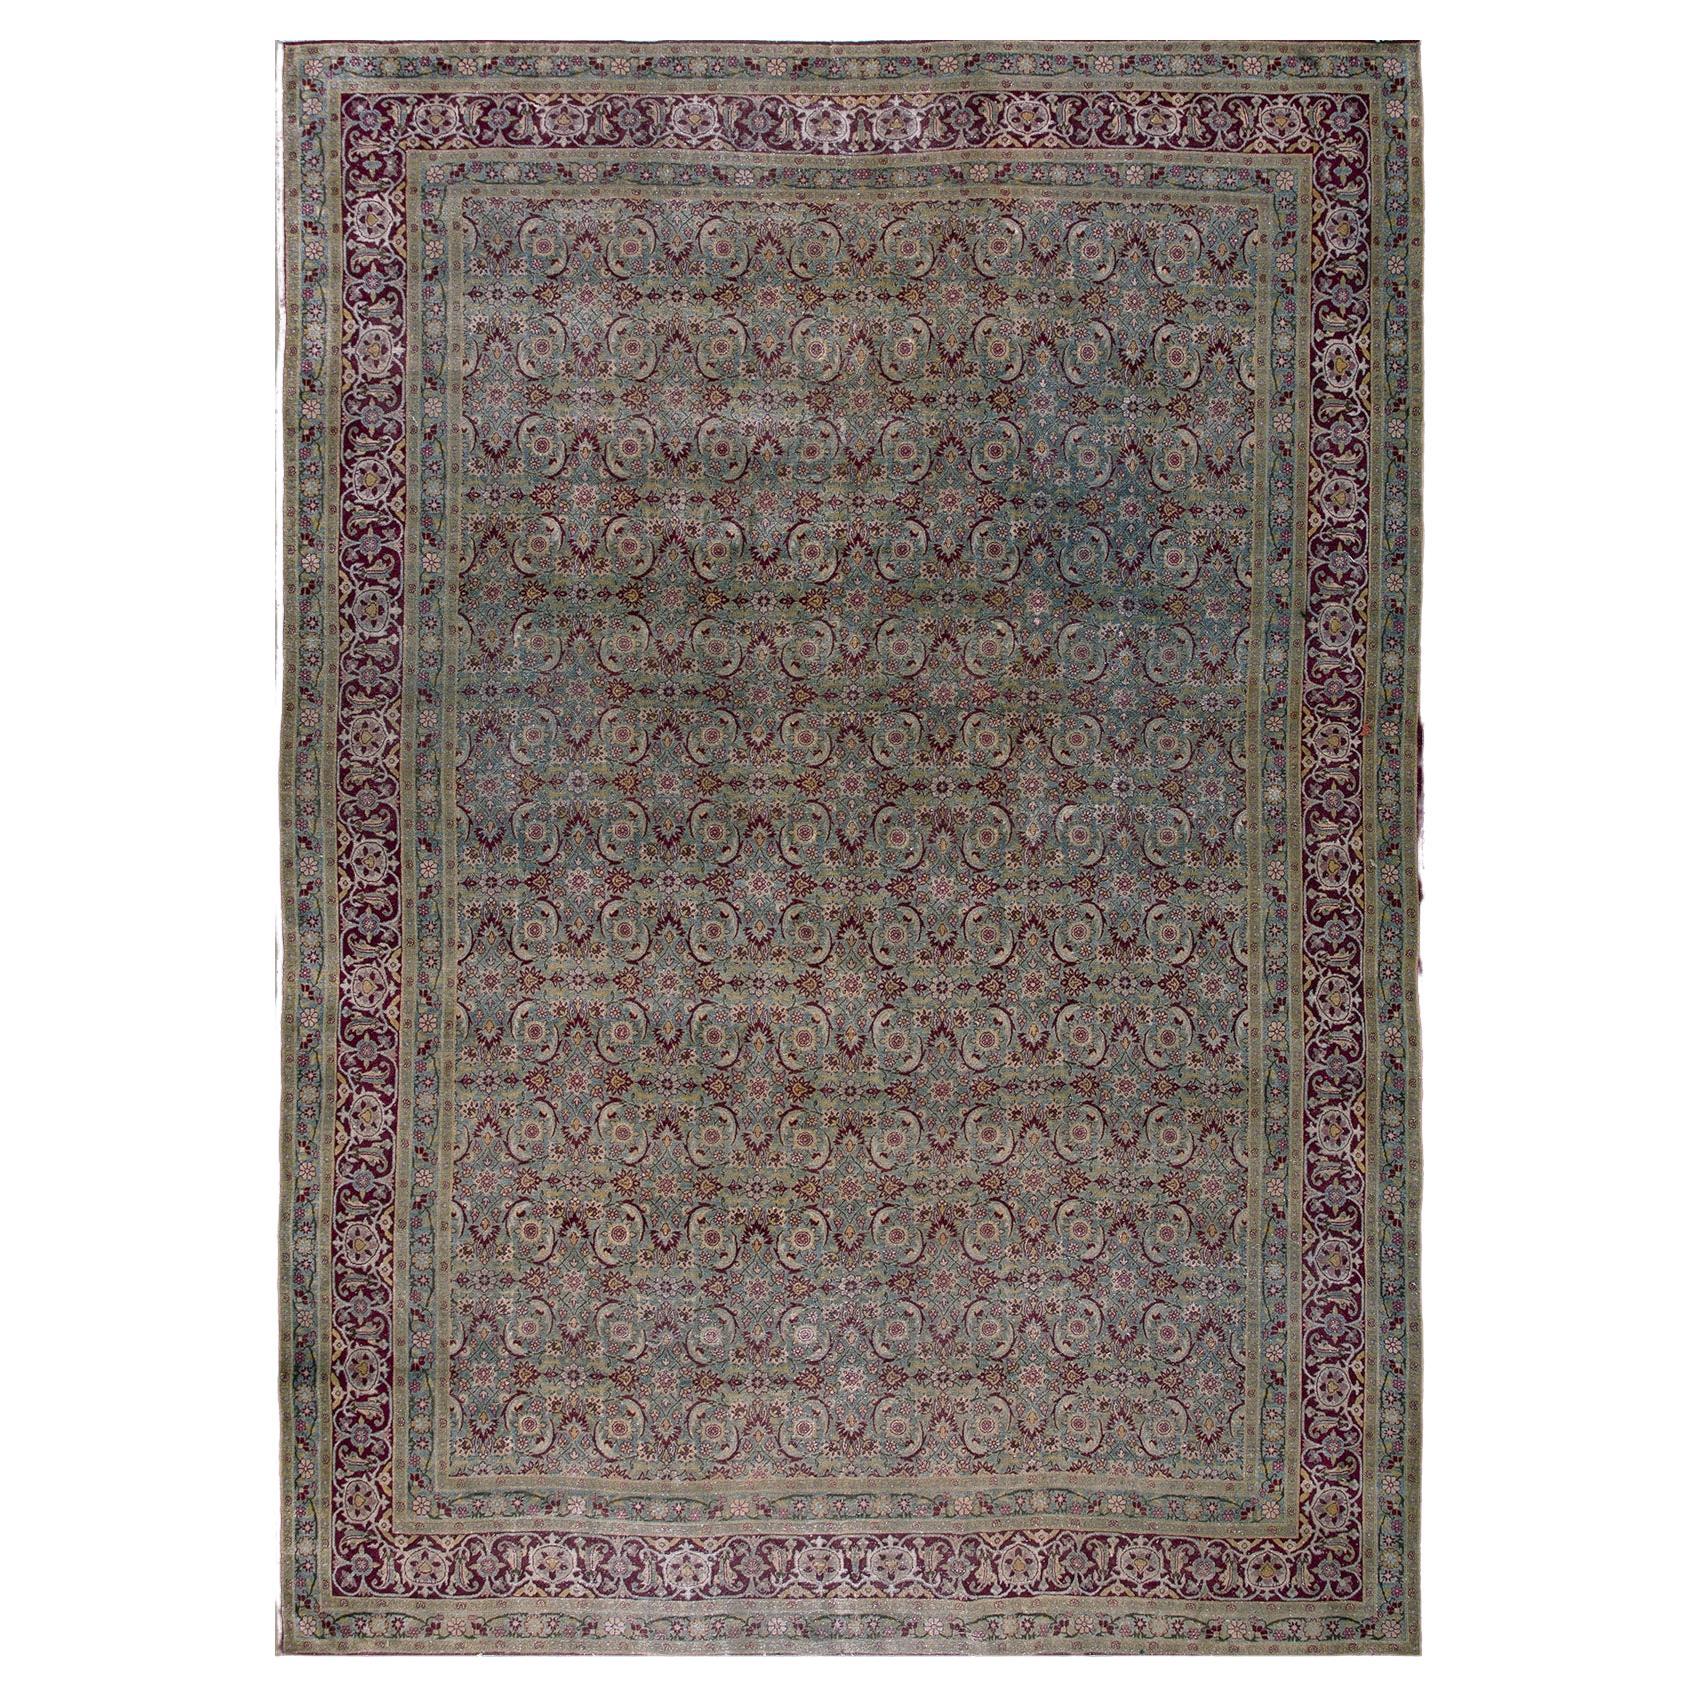 Early 20th Century E. Persian Kirman Carpet ( 10' x 14'4" - 305 x 437 ) For Sale